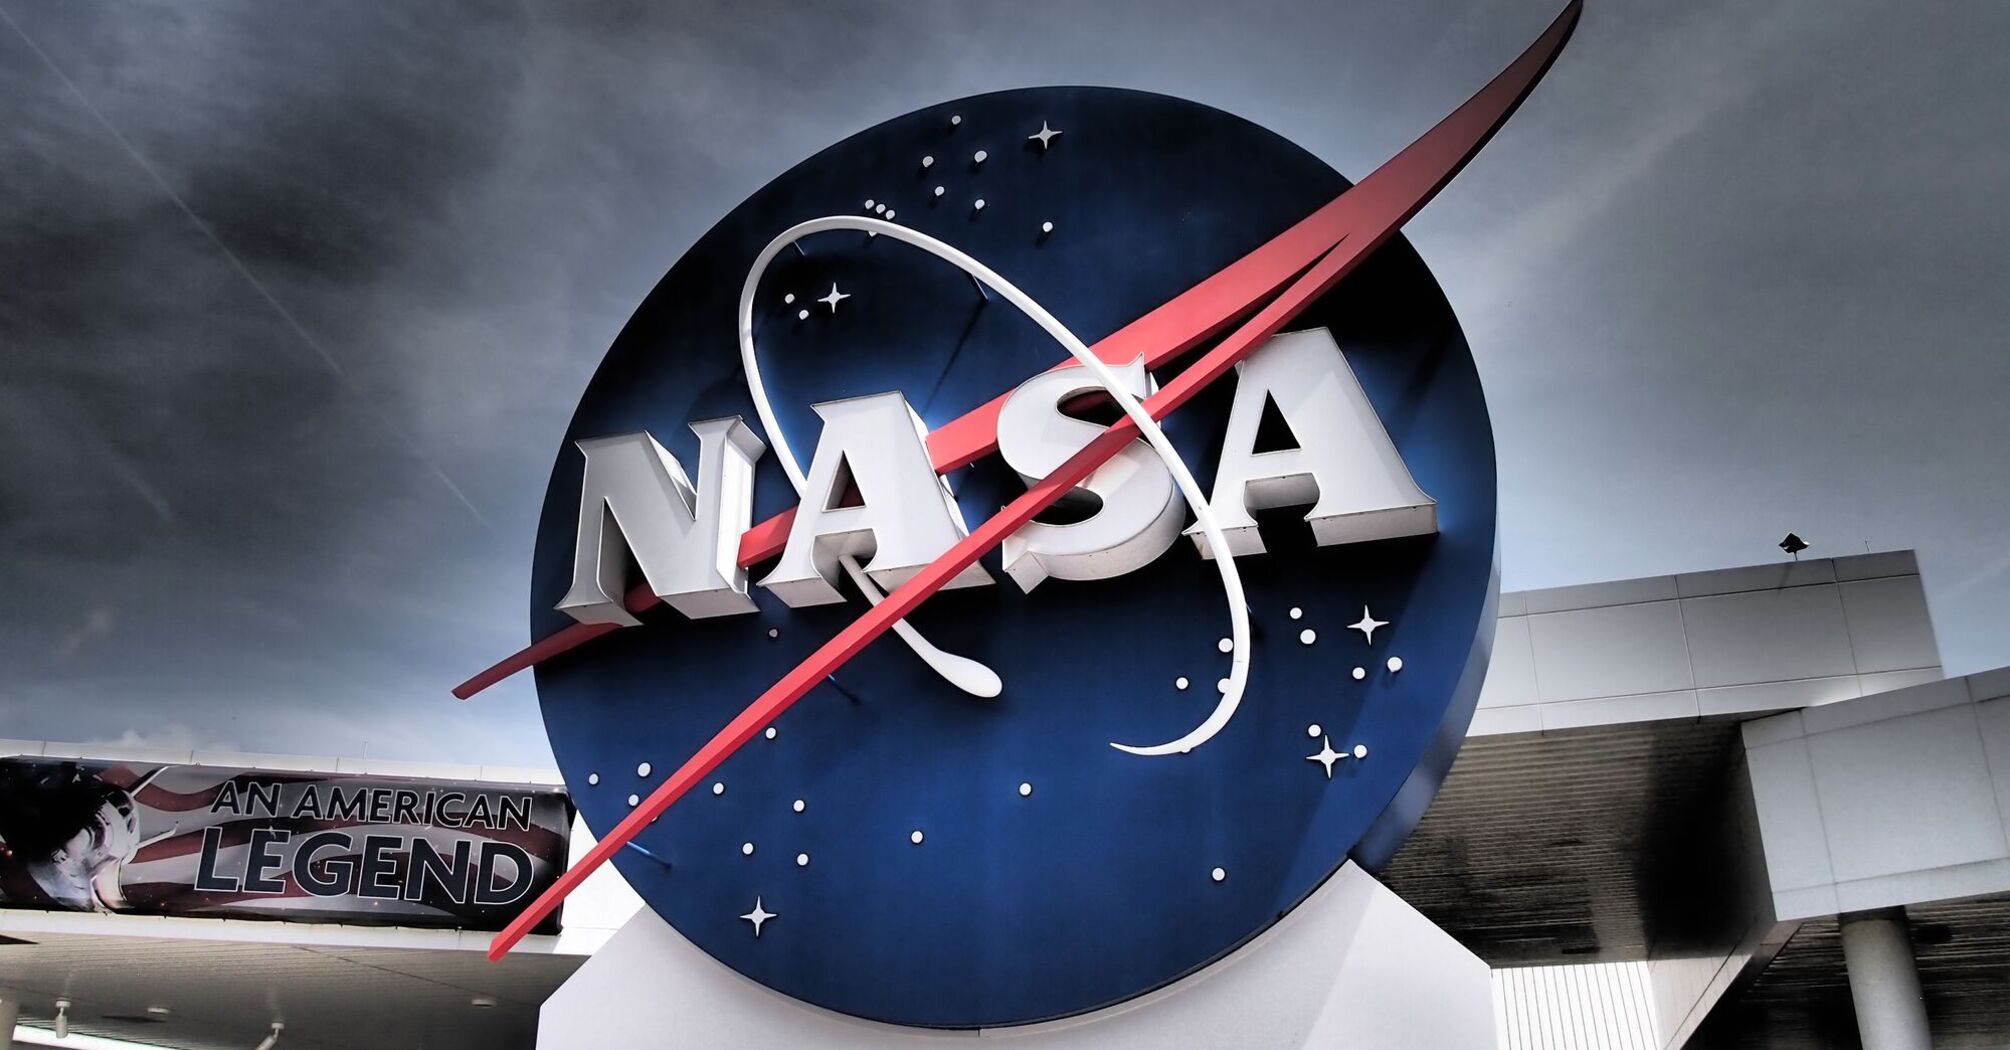 NASA USA